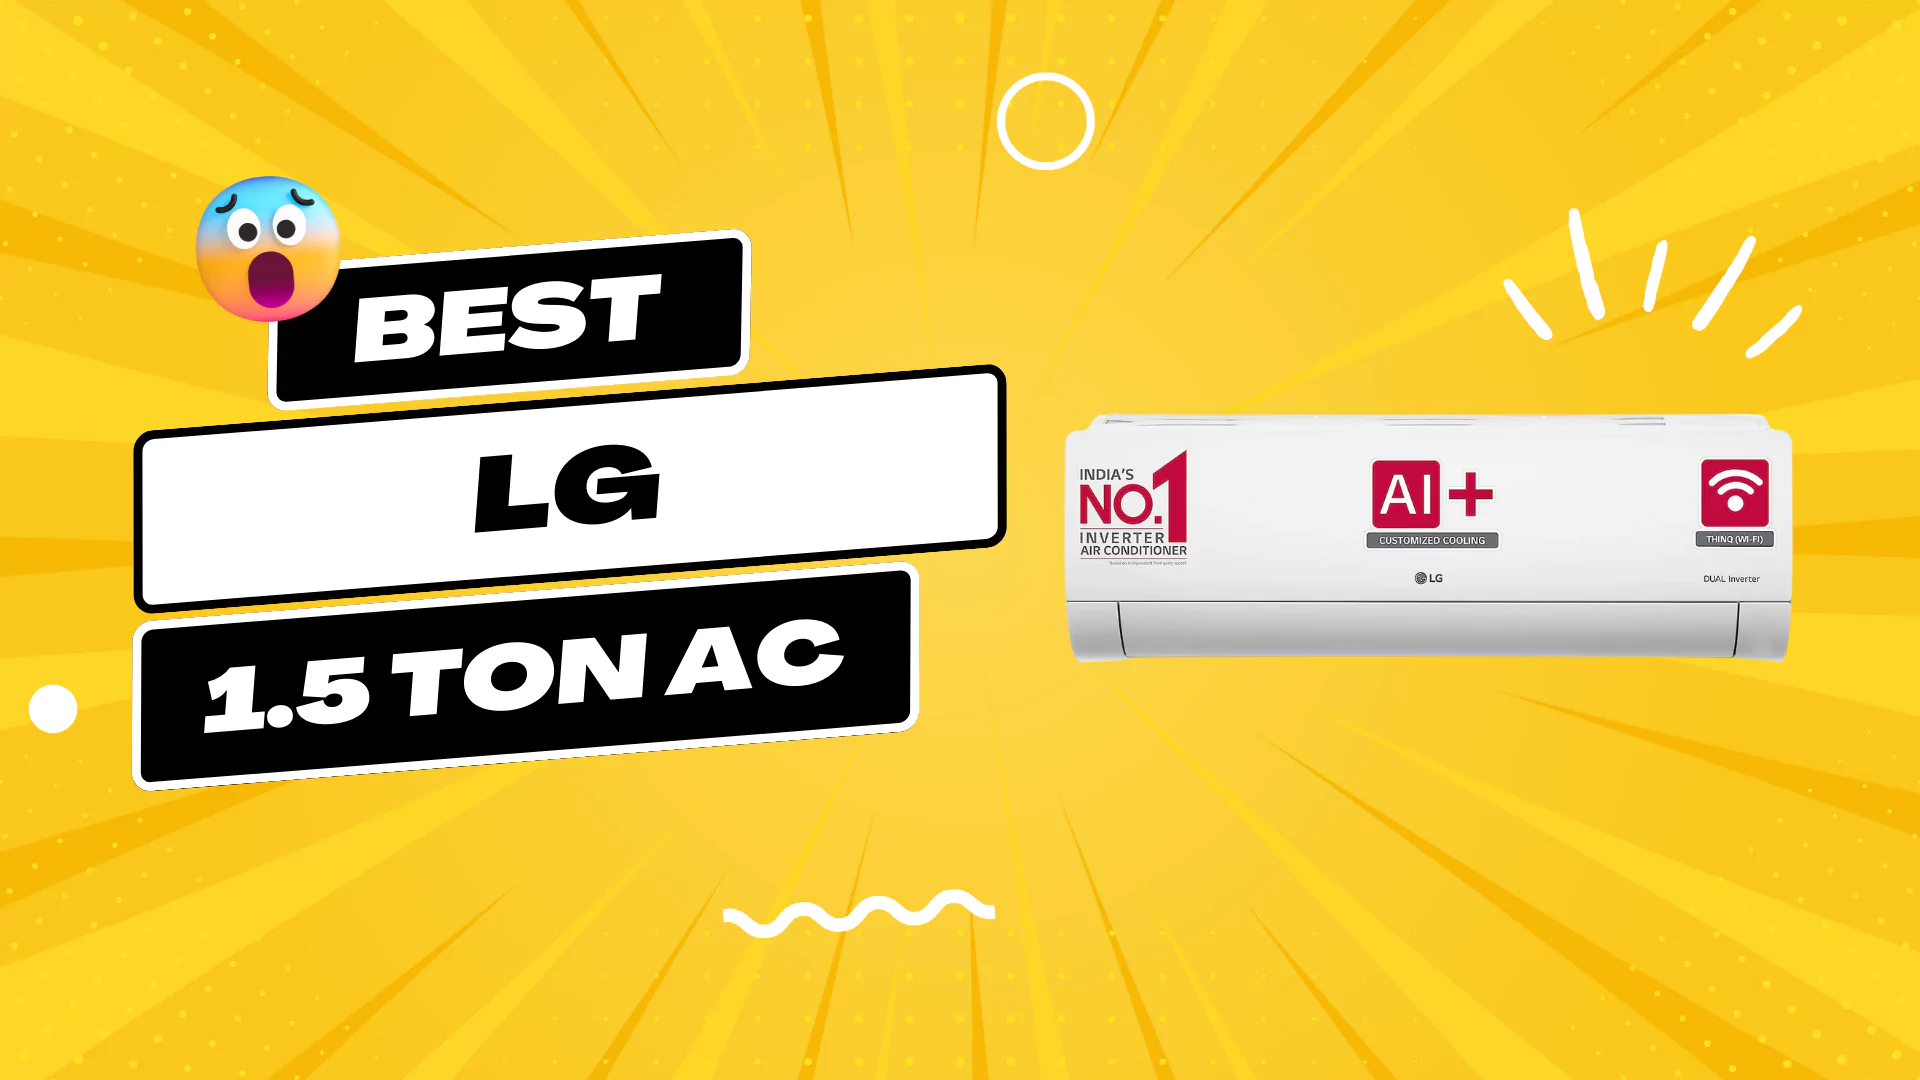 Best LG 1.5 Ton AC